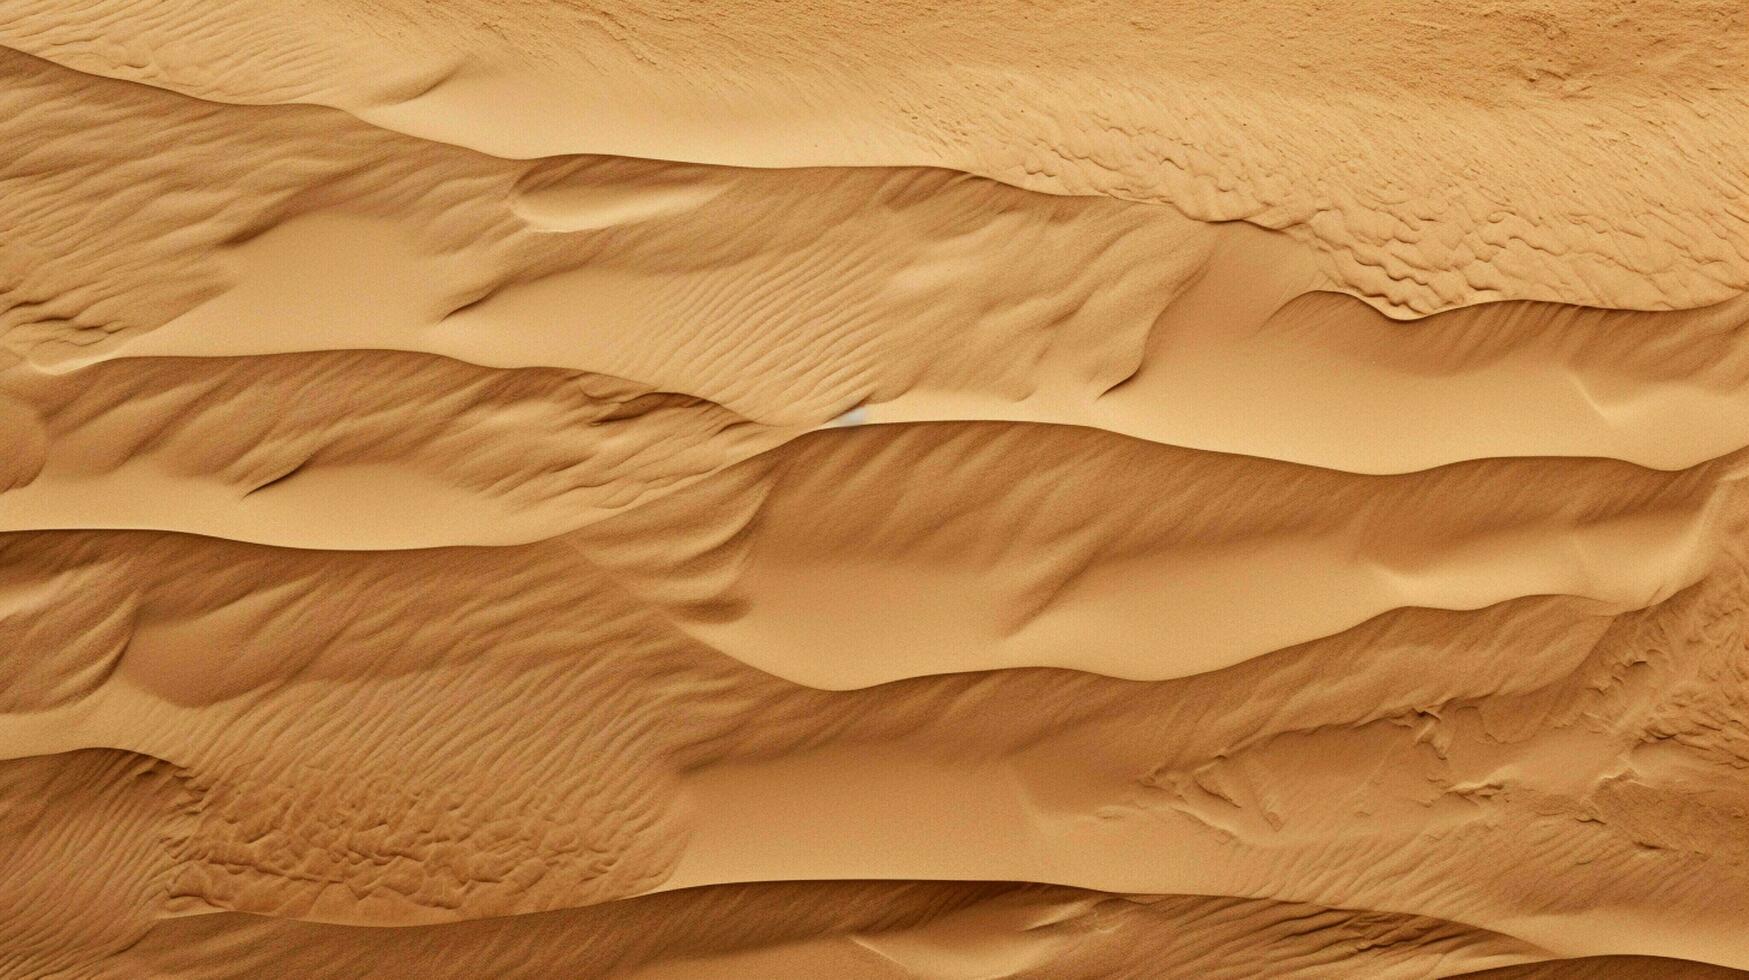 ai generato sabbia textures sfondo foto